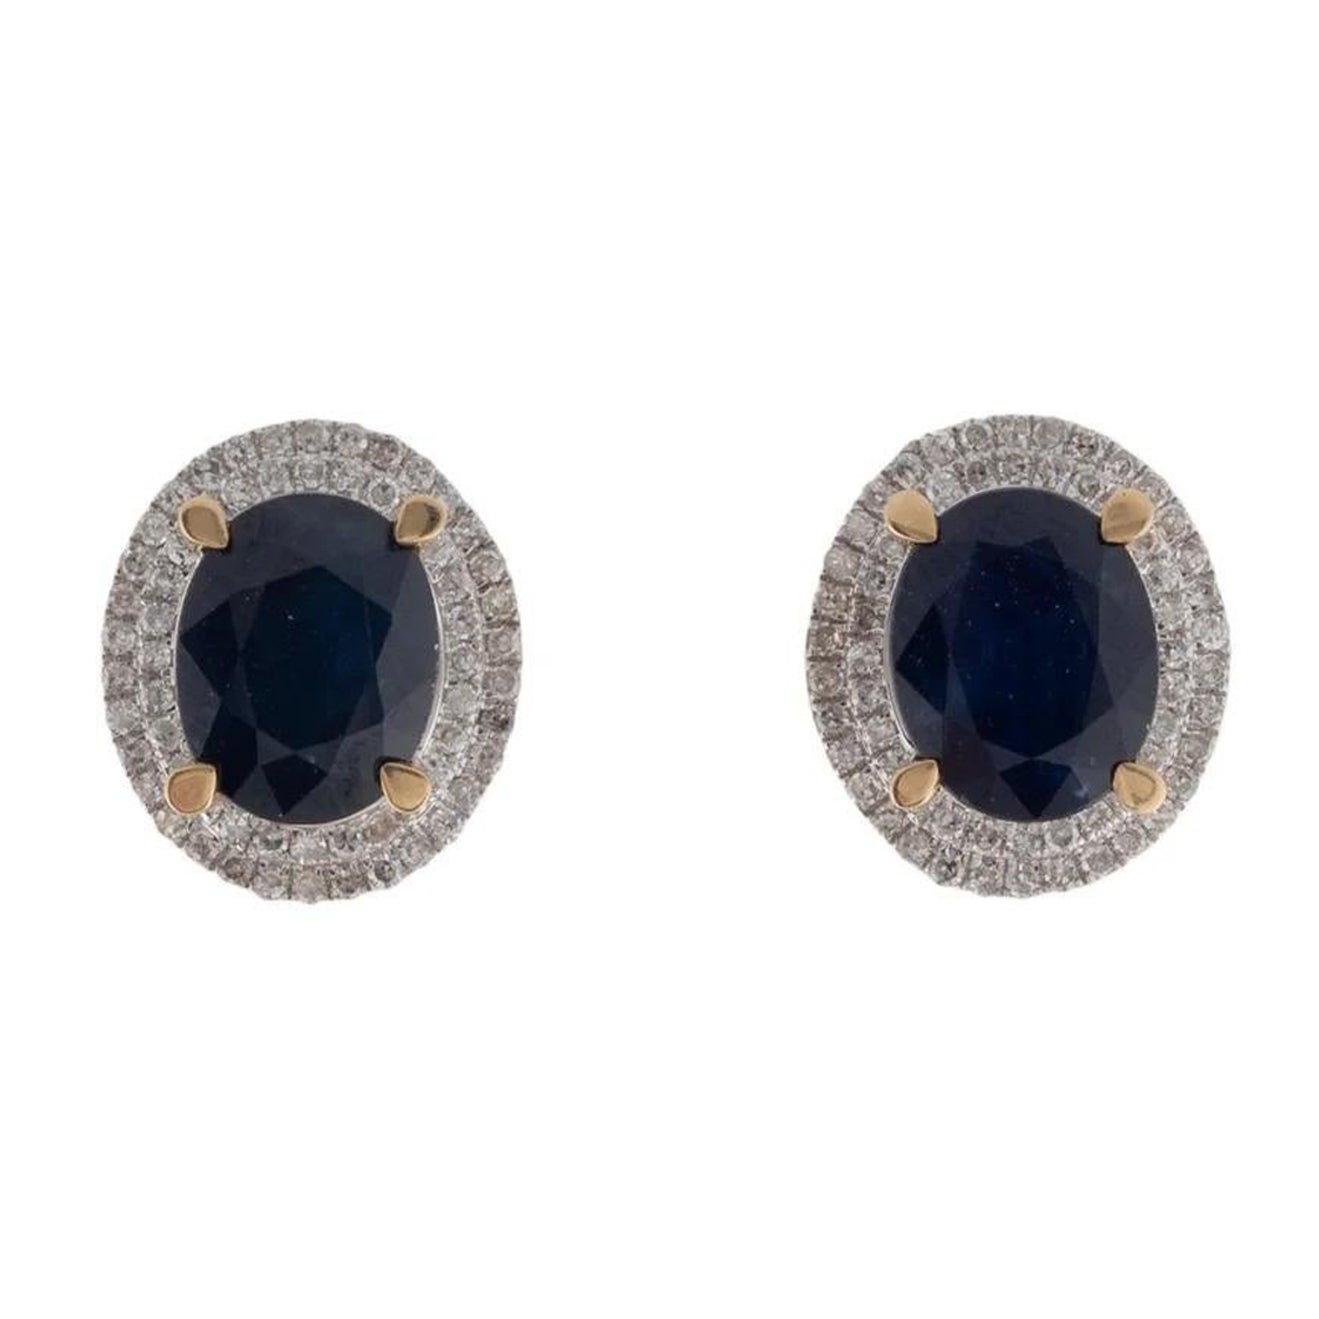 Designer 14K Sapphire & Diamond Stud Earrings, Statement Gemstone Jewelry For Sale